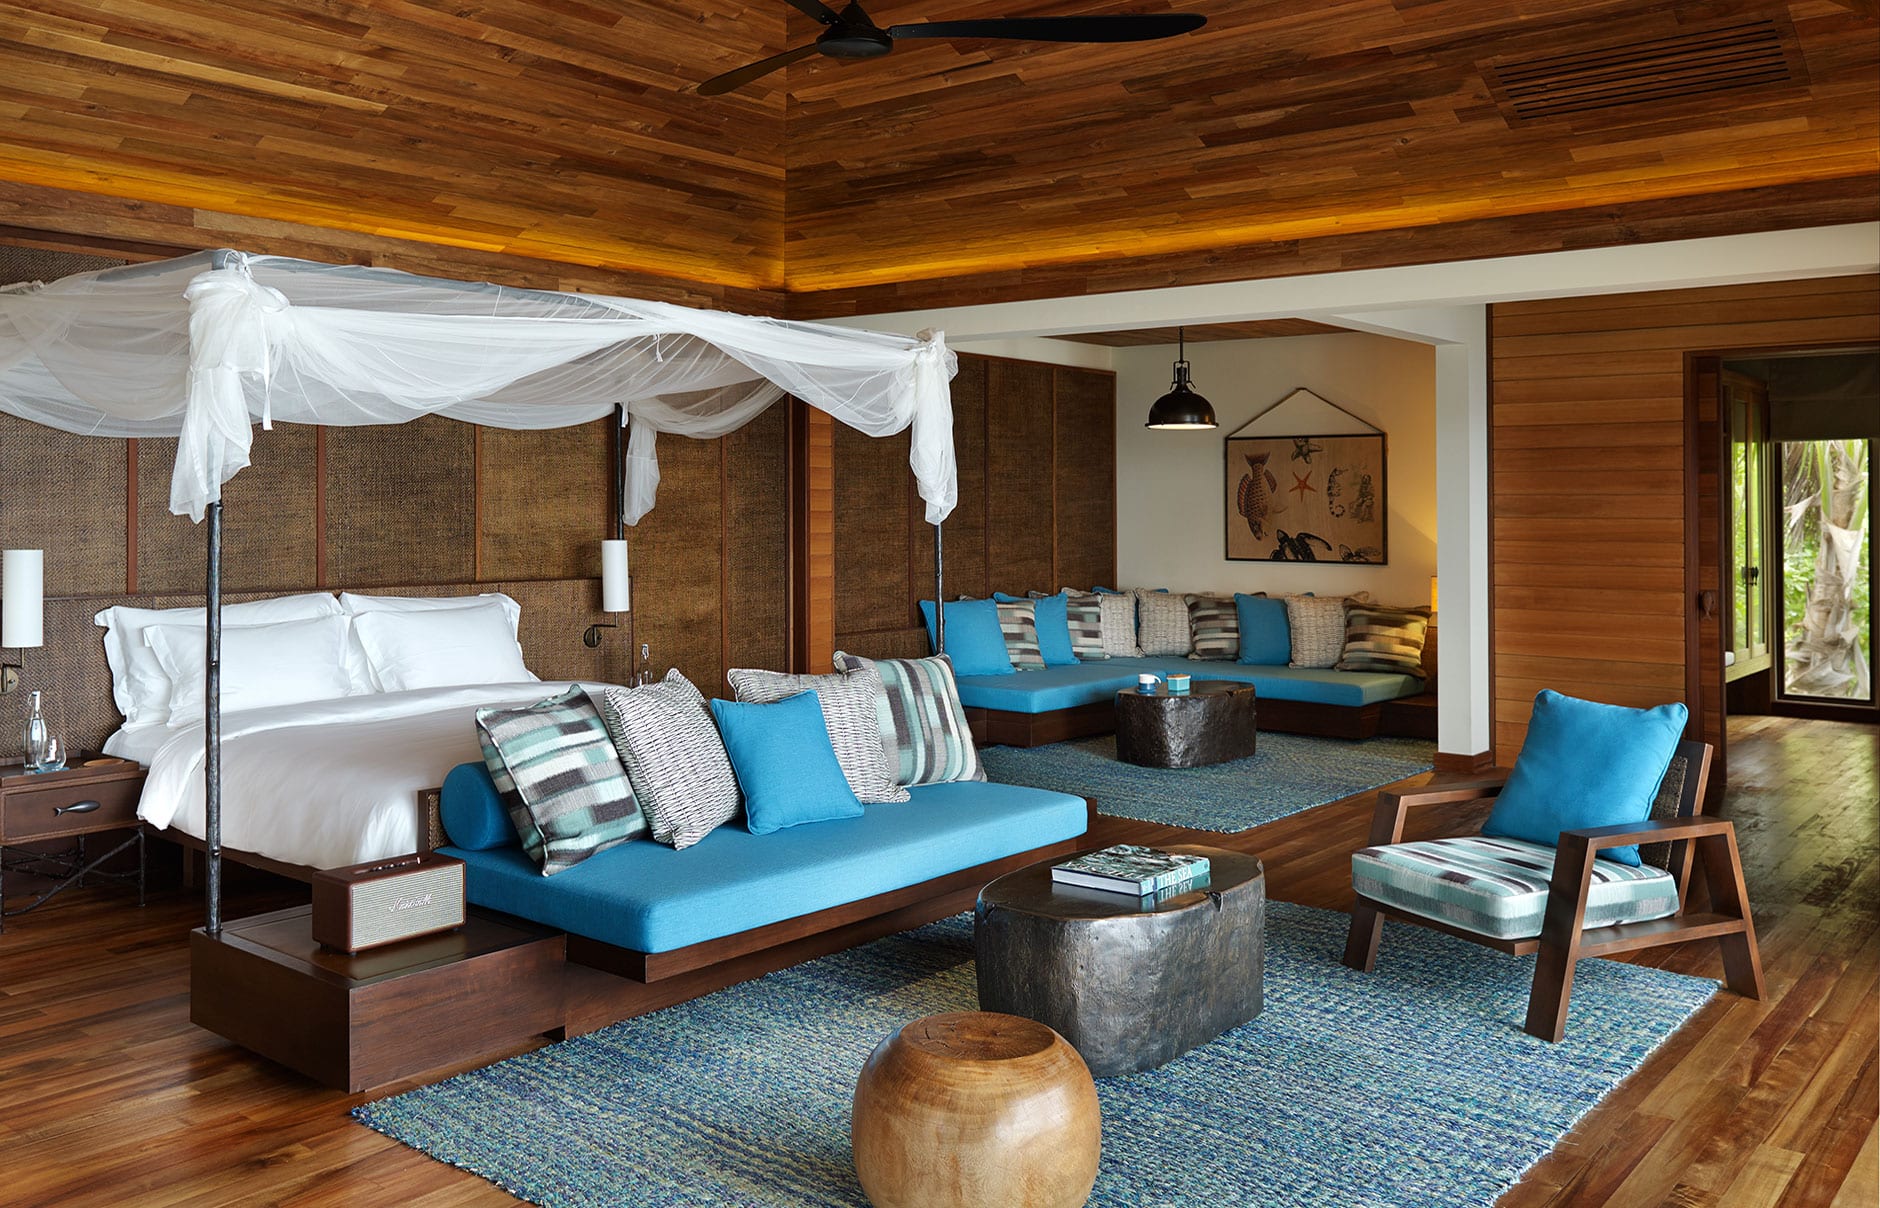 Six Senses Zil Pasyon, Félicité Island, Seychelles. Luxury Hotel Review by TravelPlusStyle. Photo © Six Senses 